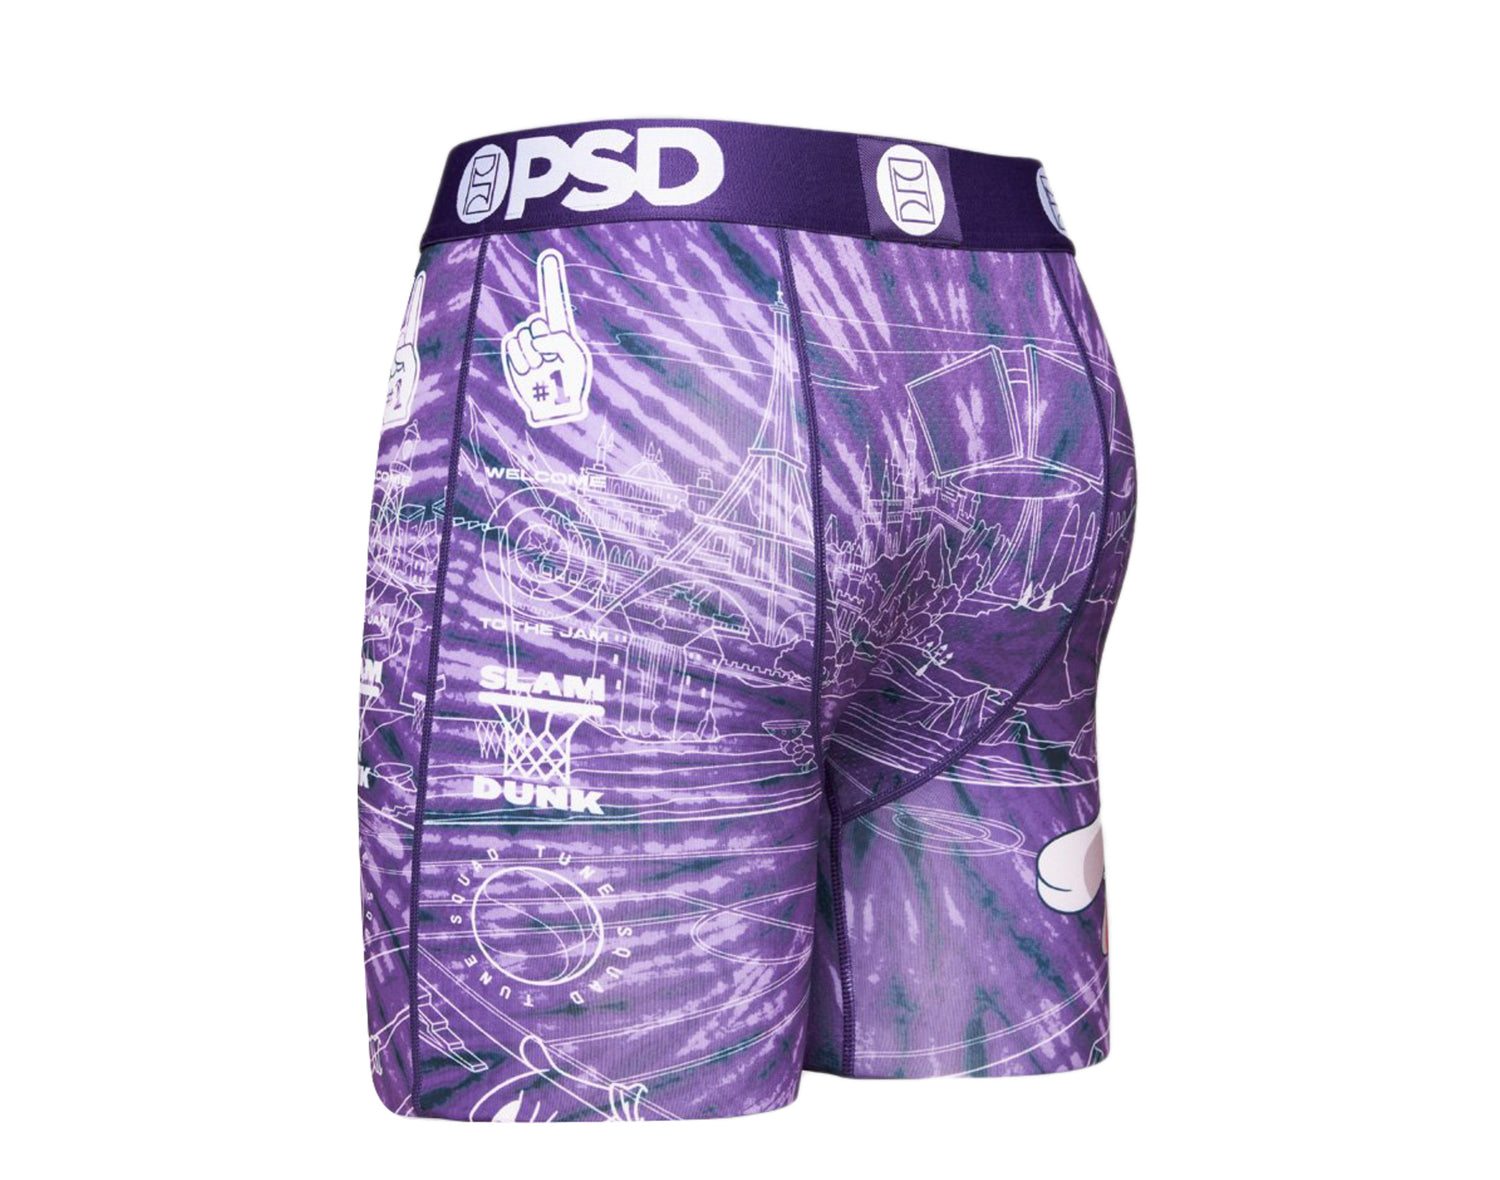 PSD Bugs Ball Boxer Briefs Men's Underwear